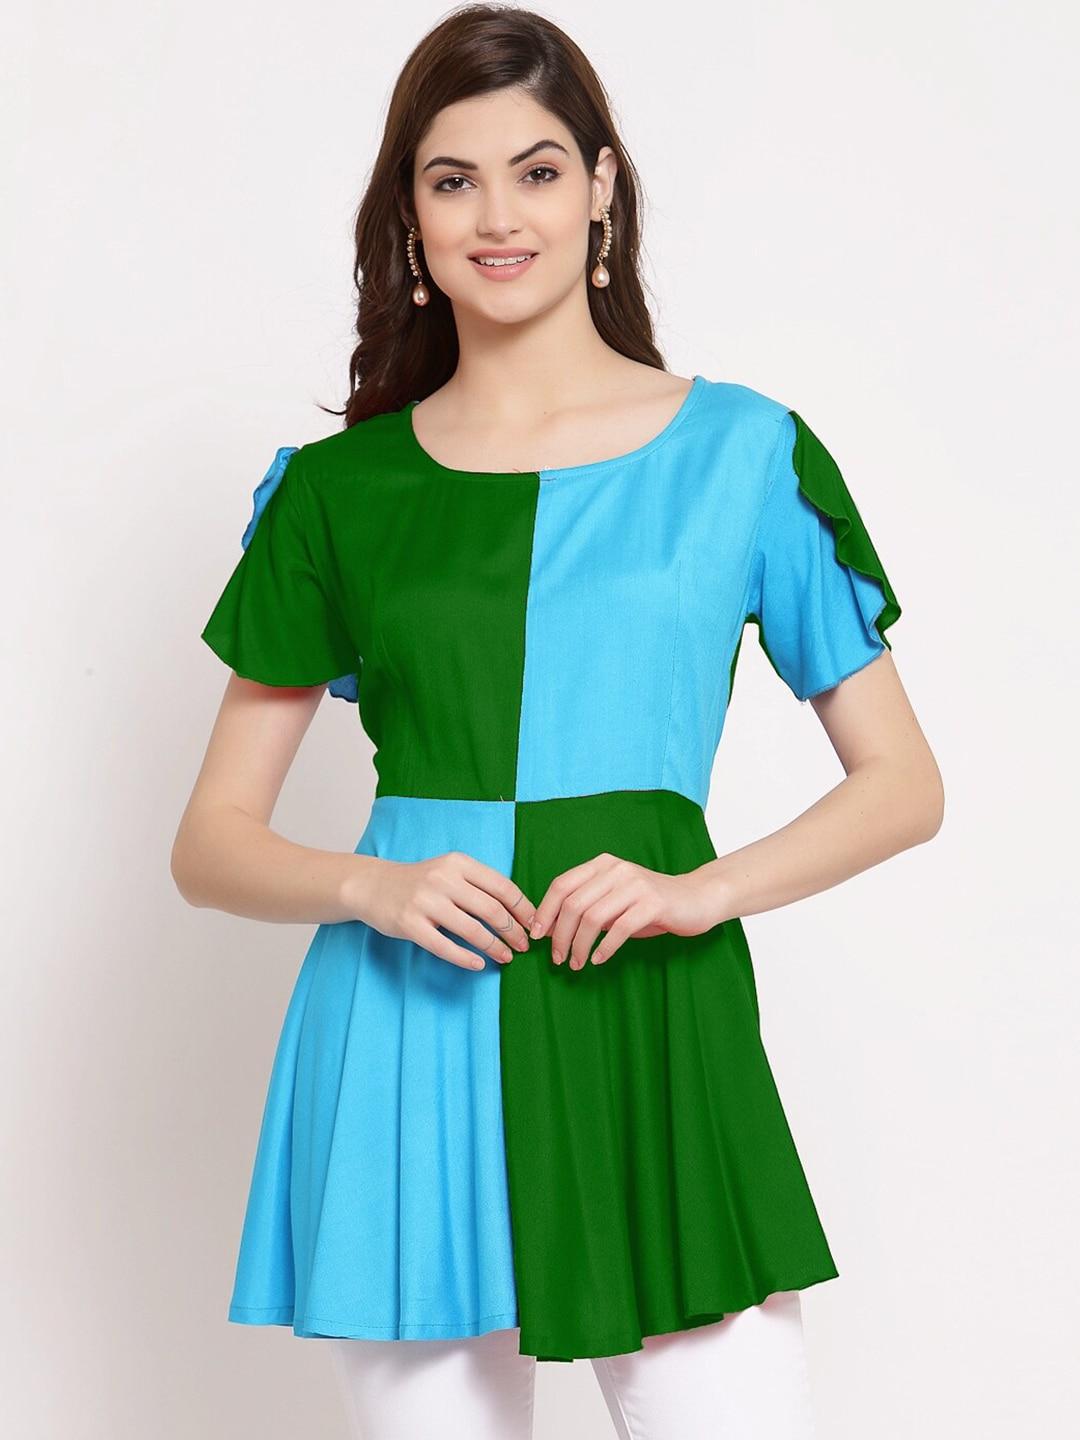 patrorna-women-green-&-blue-colourblocked-top